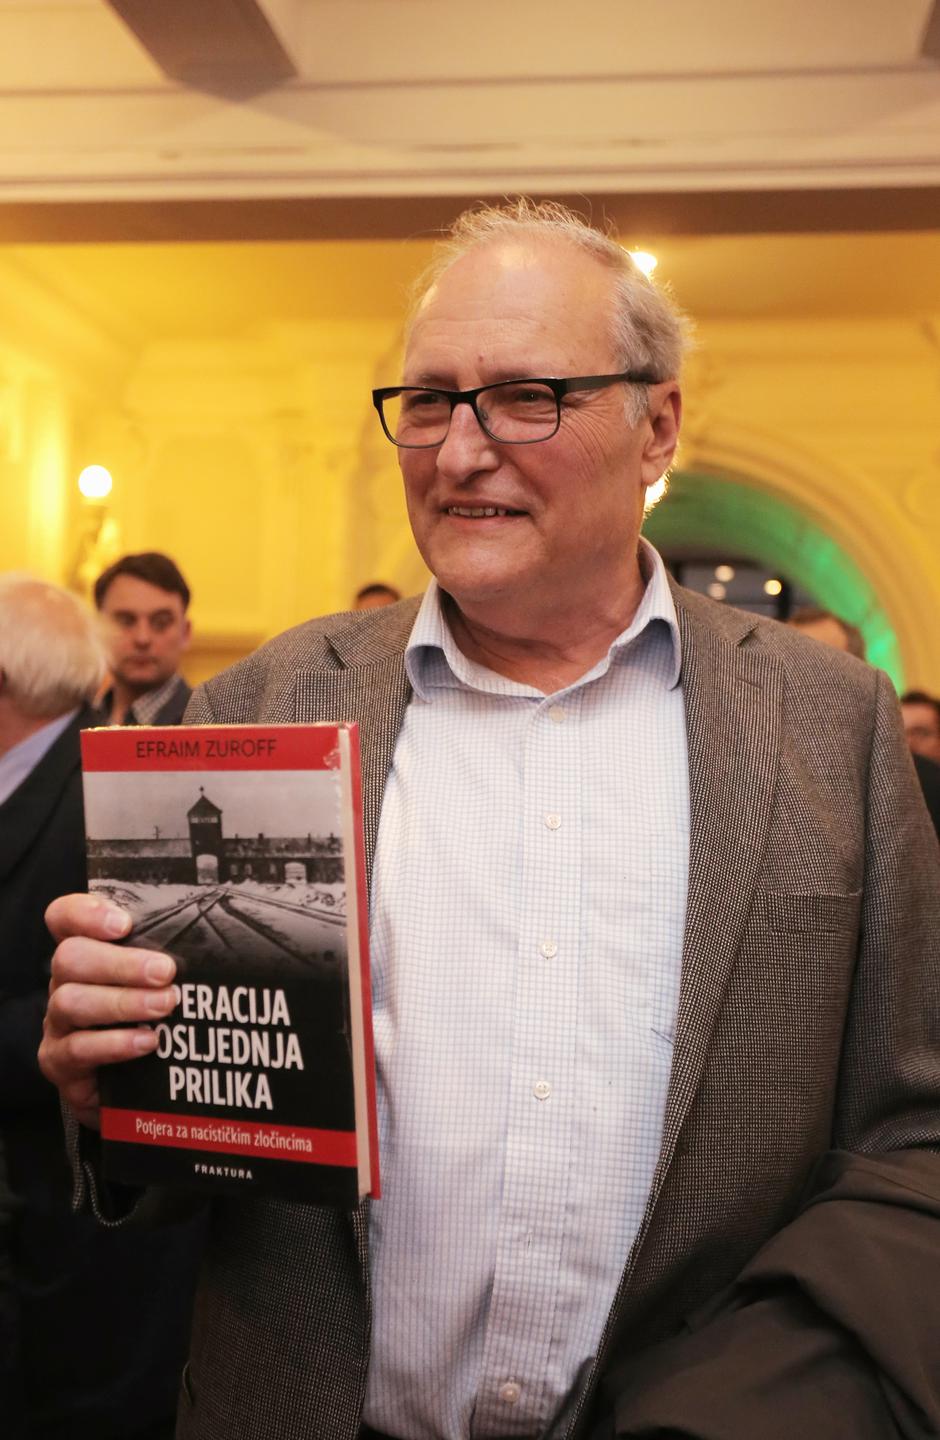 Efraim Zuroff | Author: Tomislav Miletic (PIXSELL)